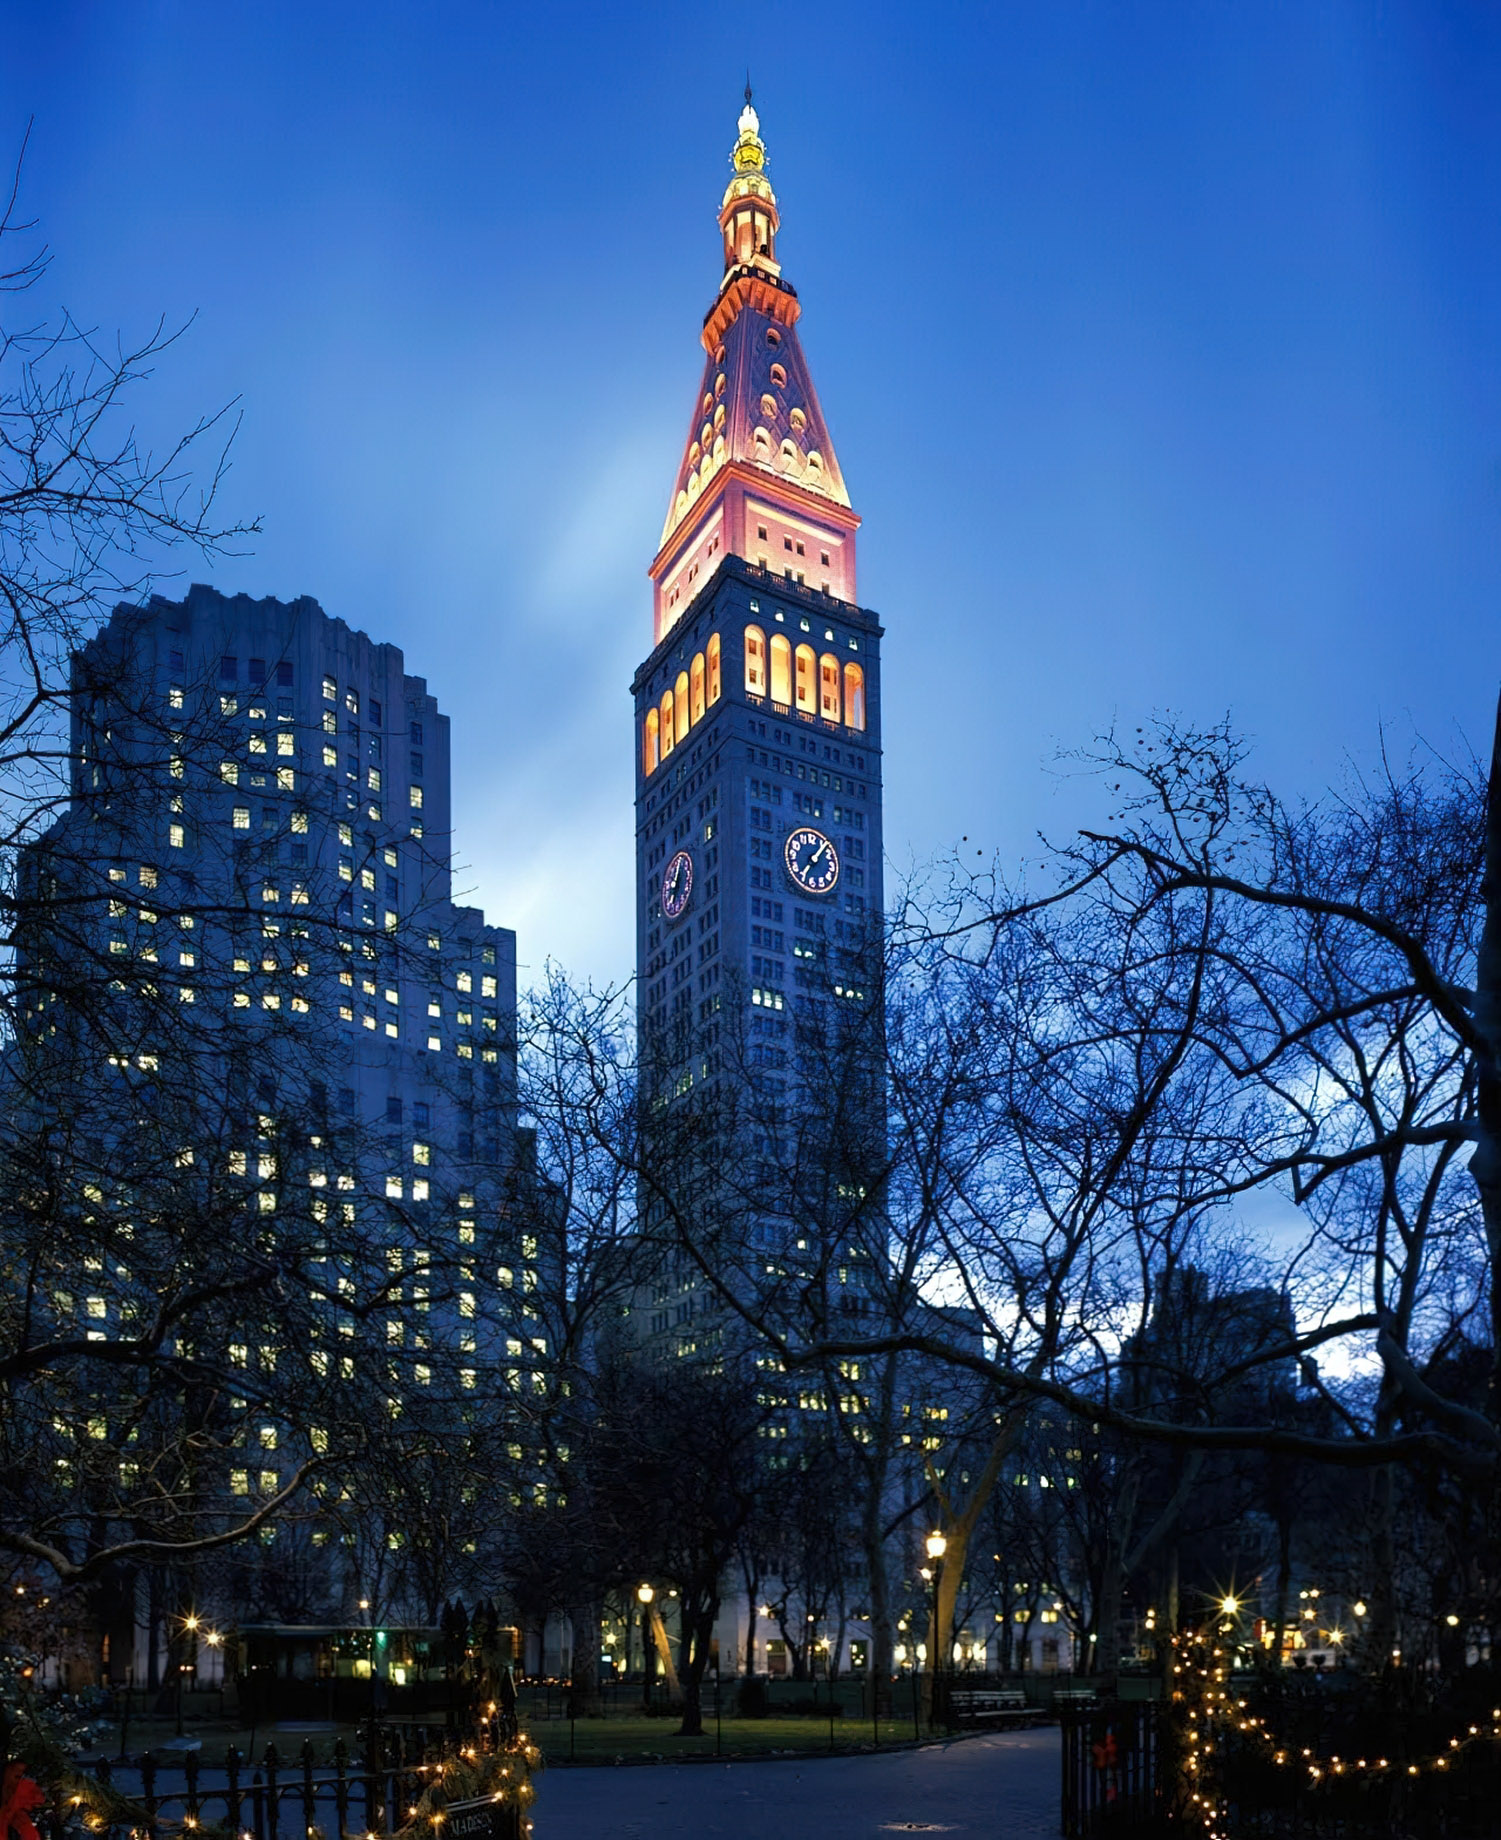 The New York EDITION Hotel - New York, NY, USA - Clocktower Night View